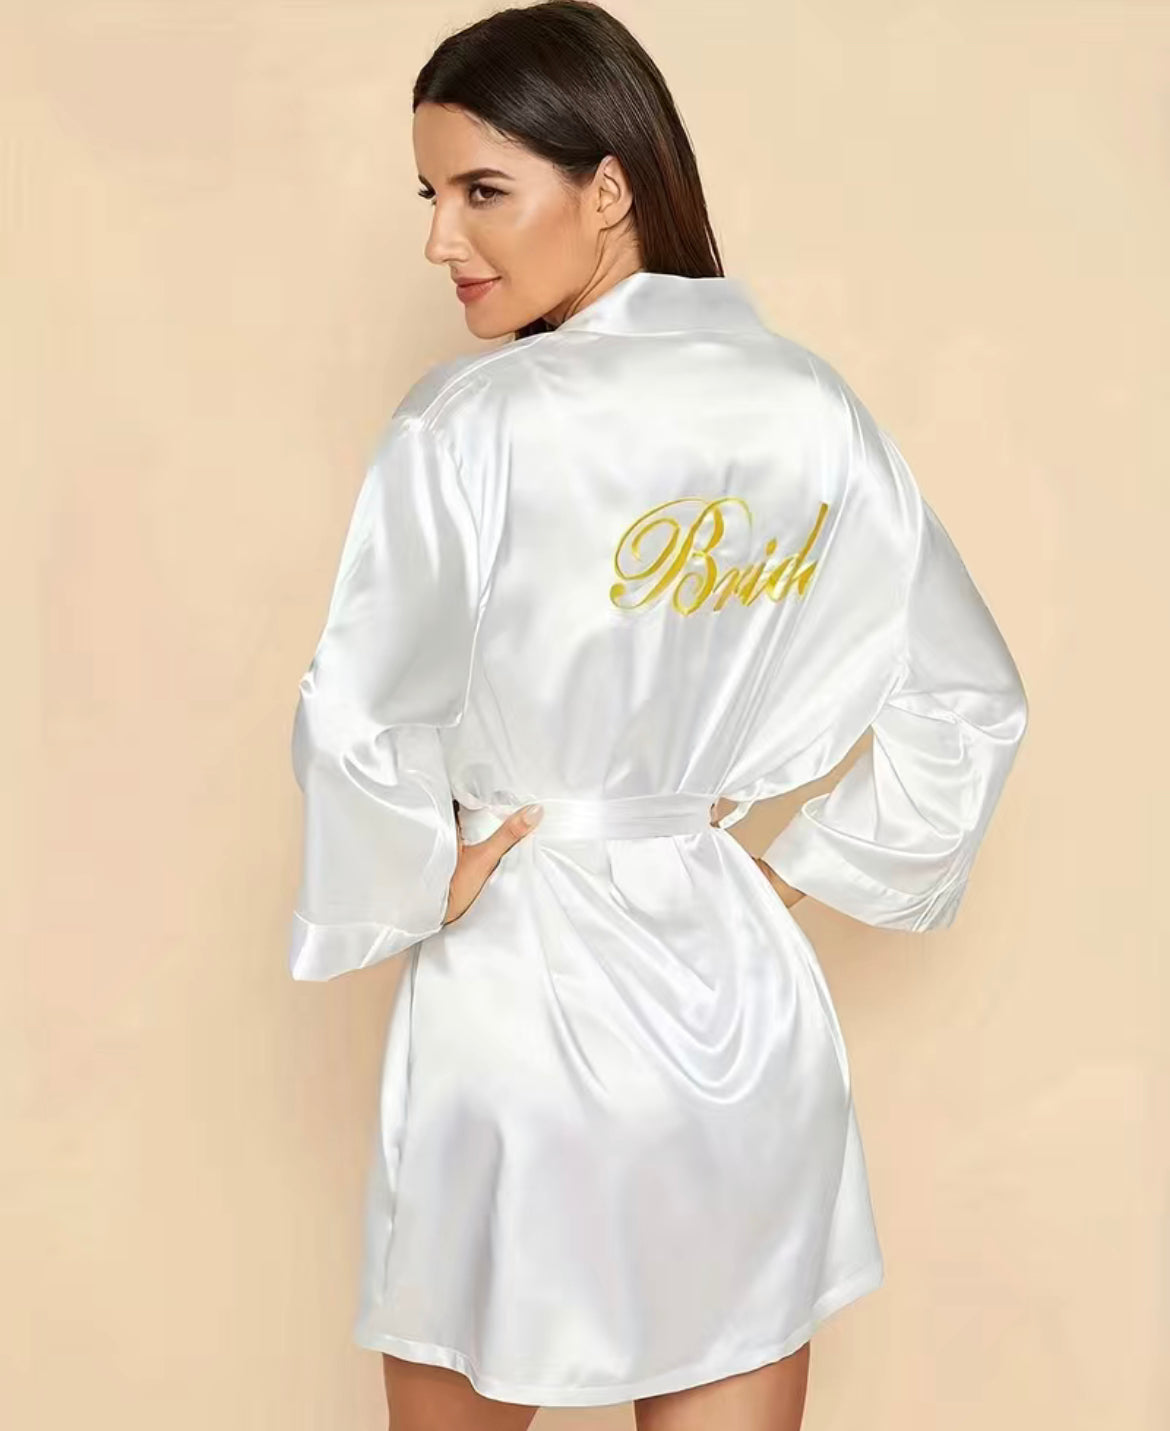 Embroidered bride robe